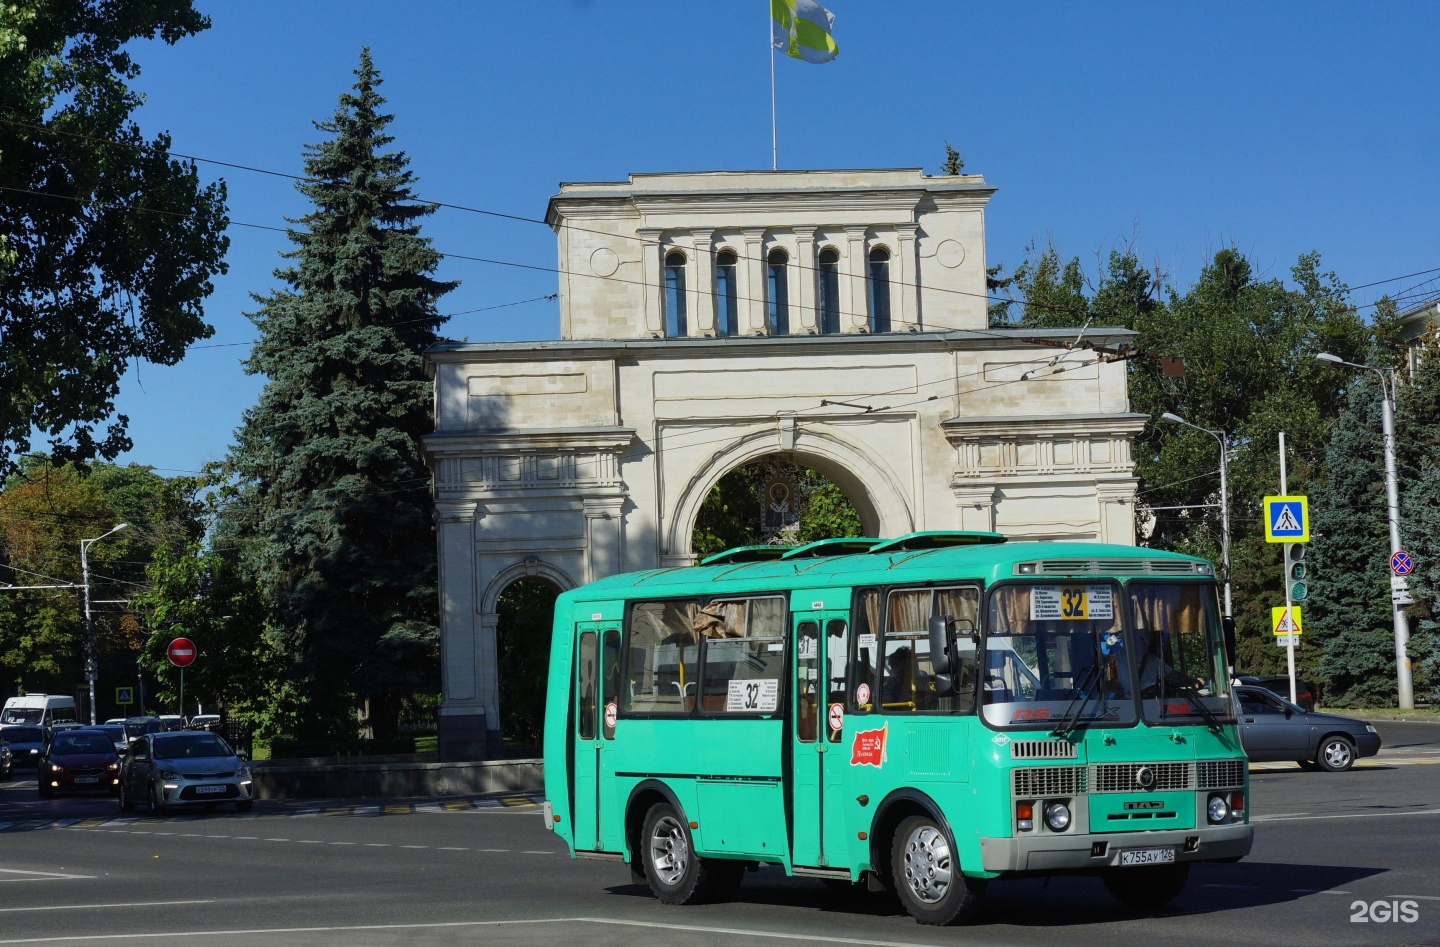 Троллейбус 4 ставрополь маршрут